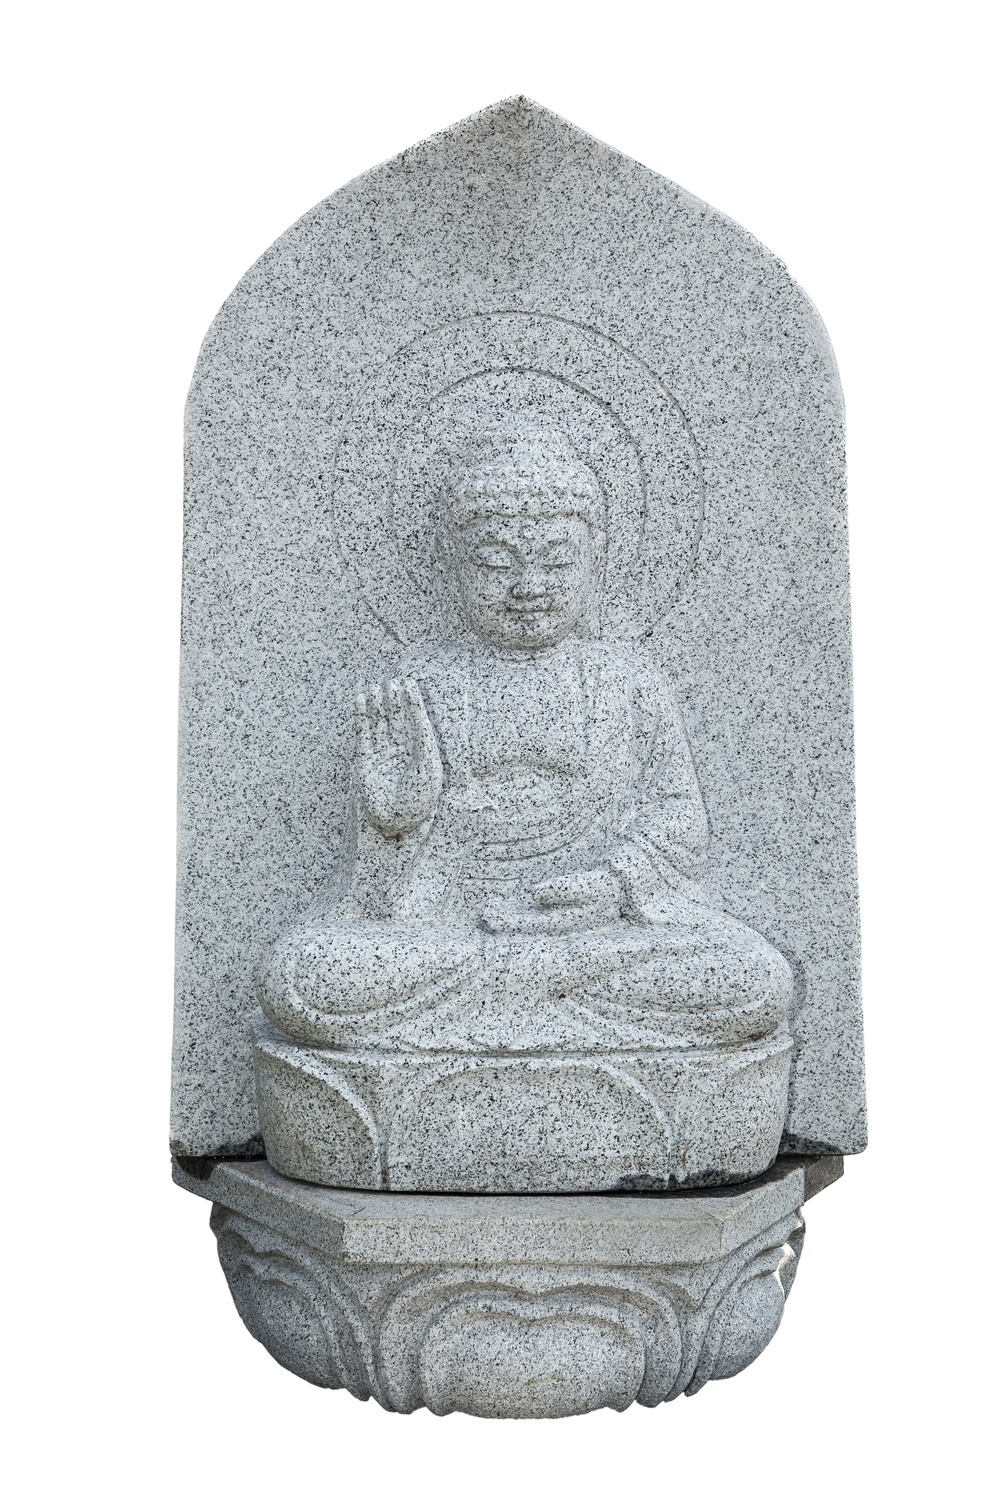 Buddha "Mara" sitzend, mit Rückwand, Höhe: 80cm